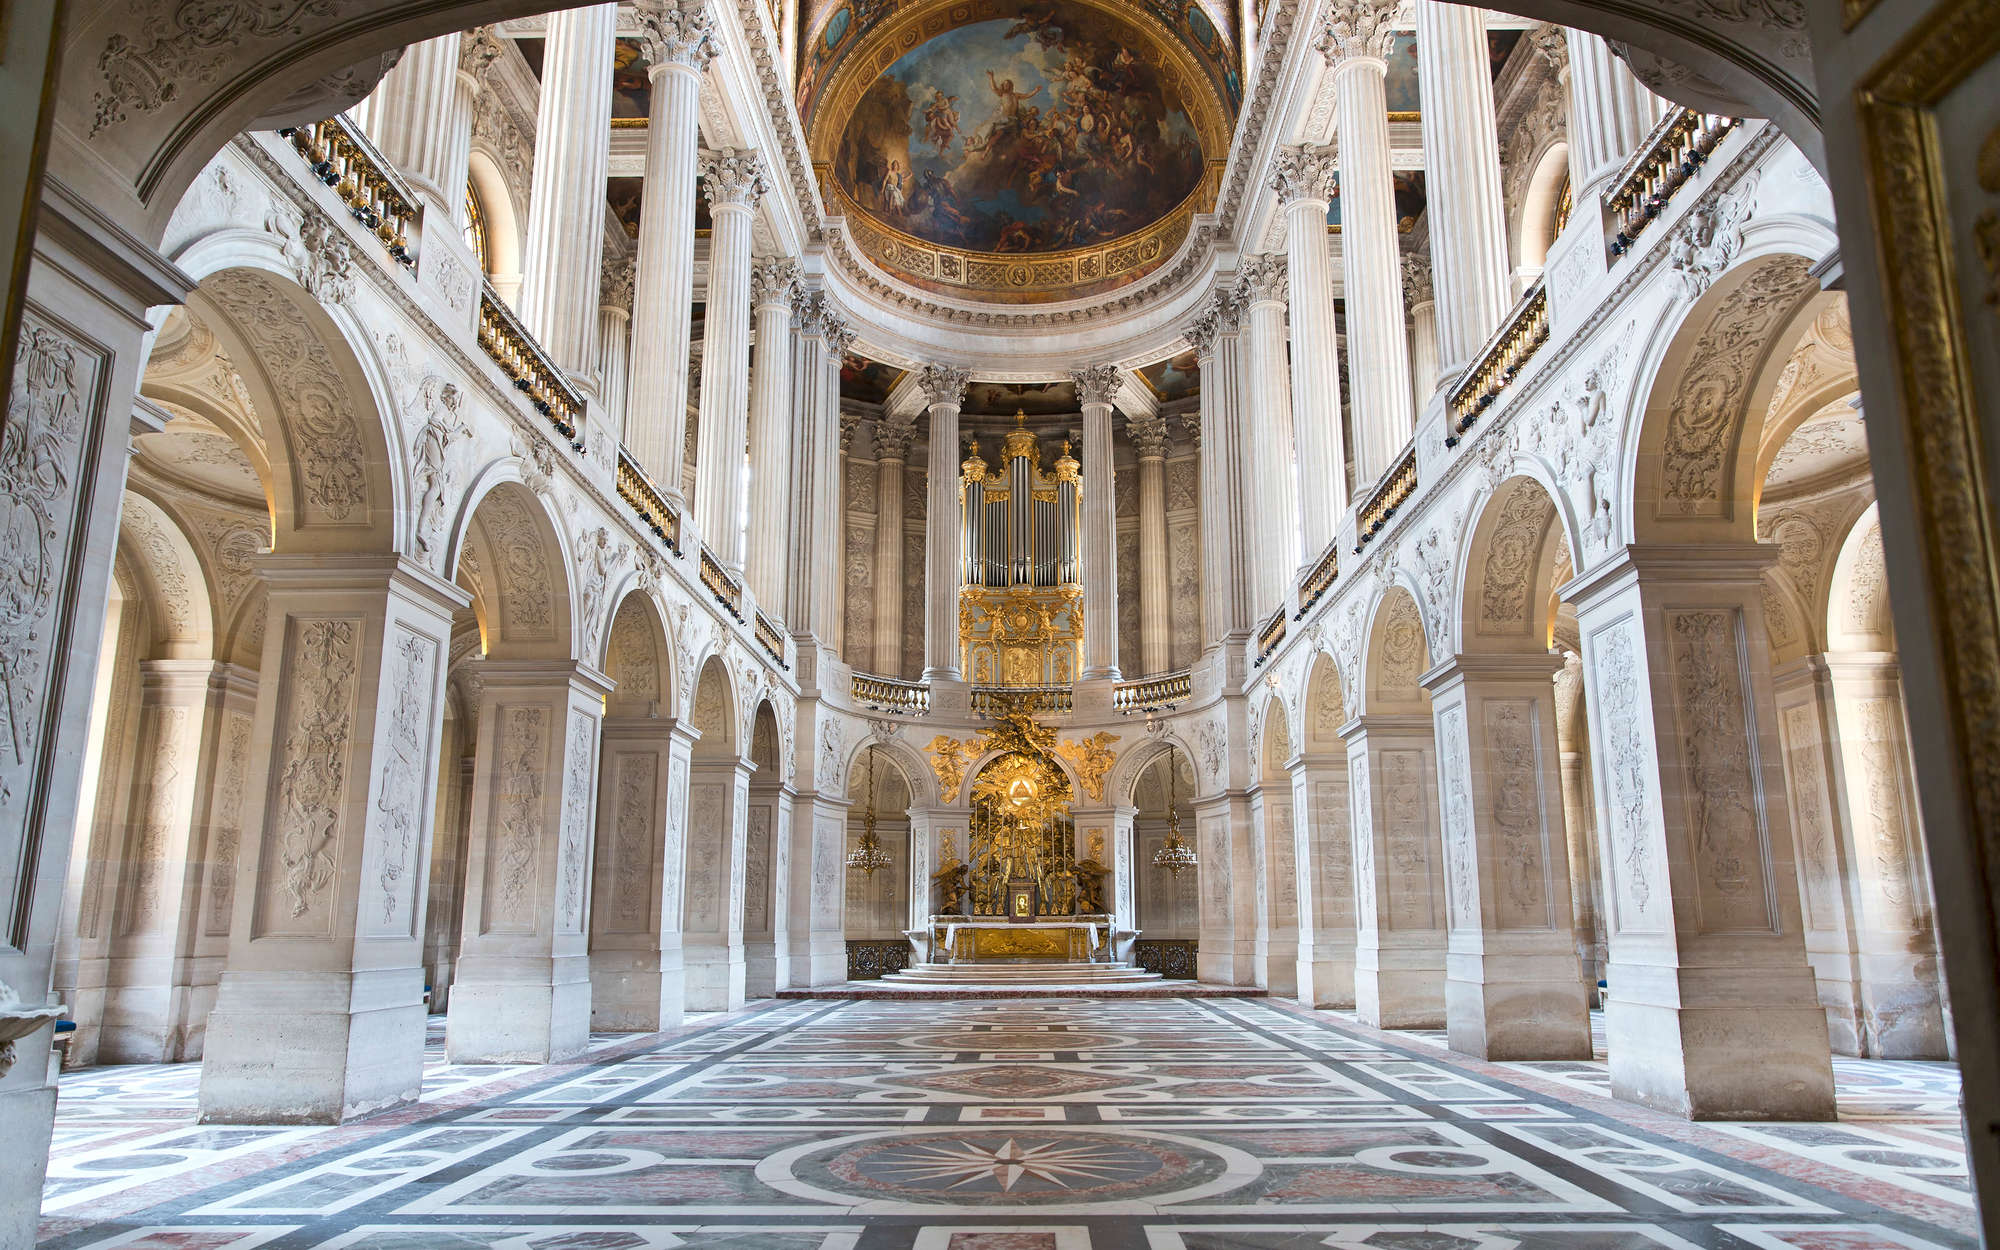             Barock Fototapete Schloss Versailles Saal – Premium Glattvlies
        